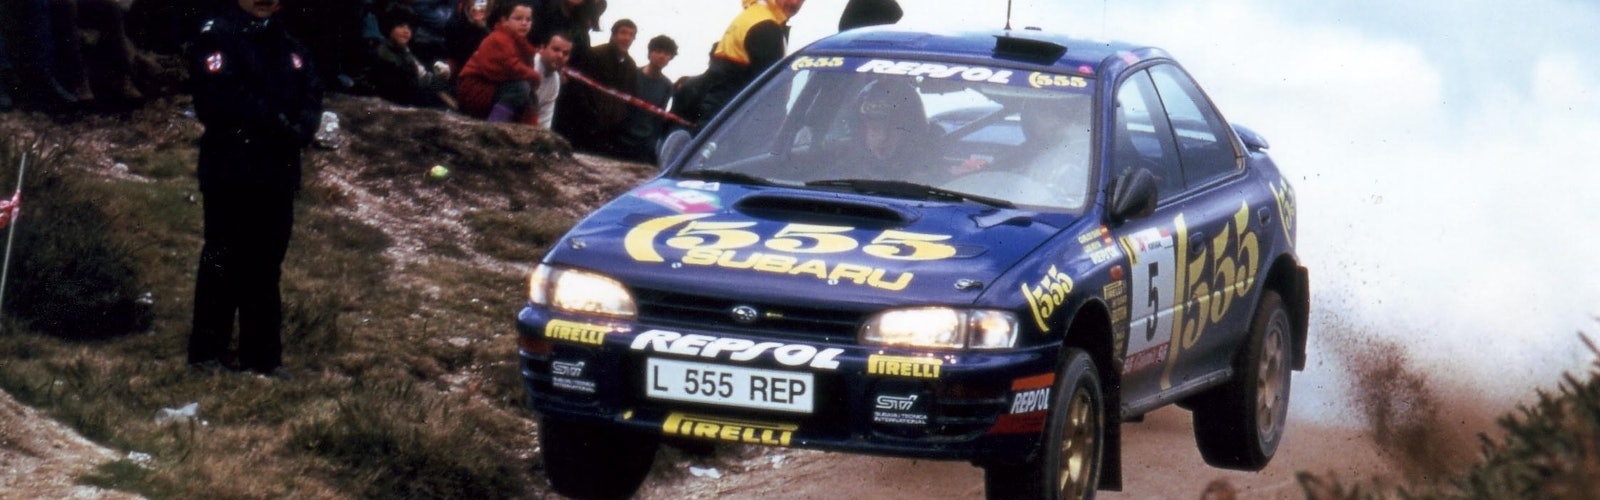 1995_rally_portugal_sainz_subaru